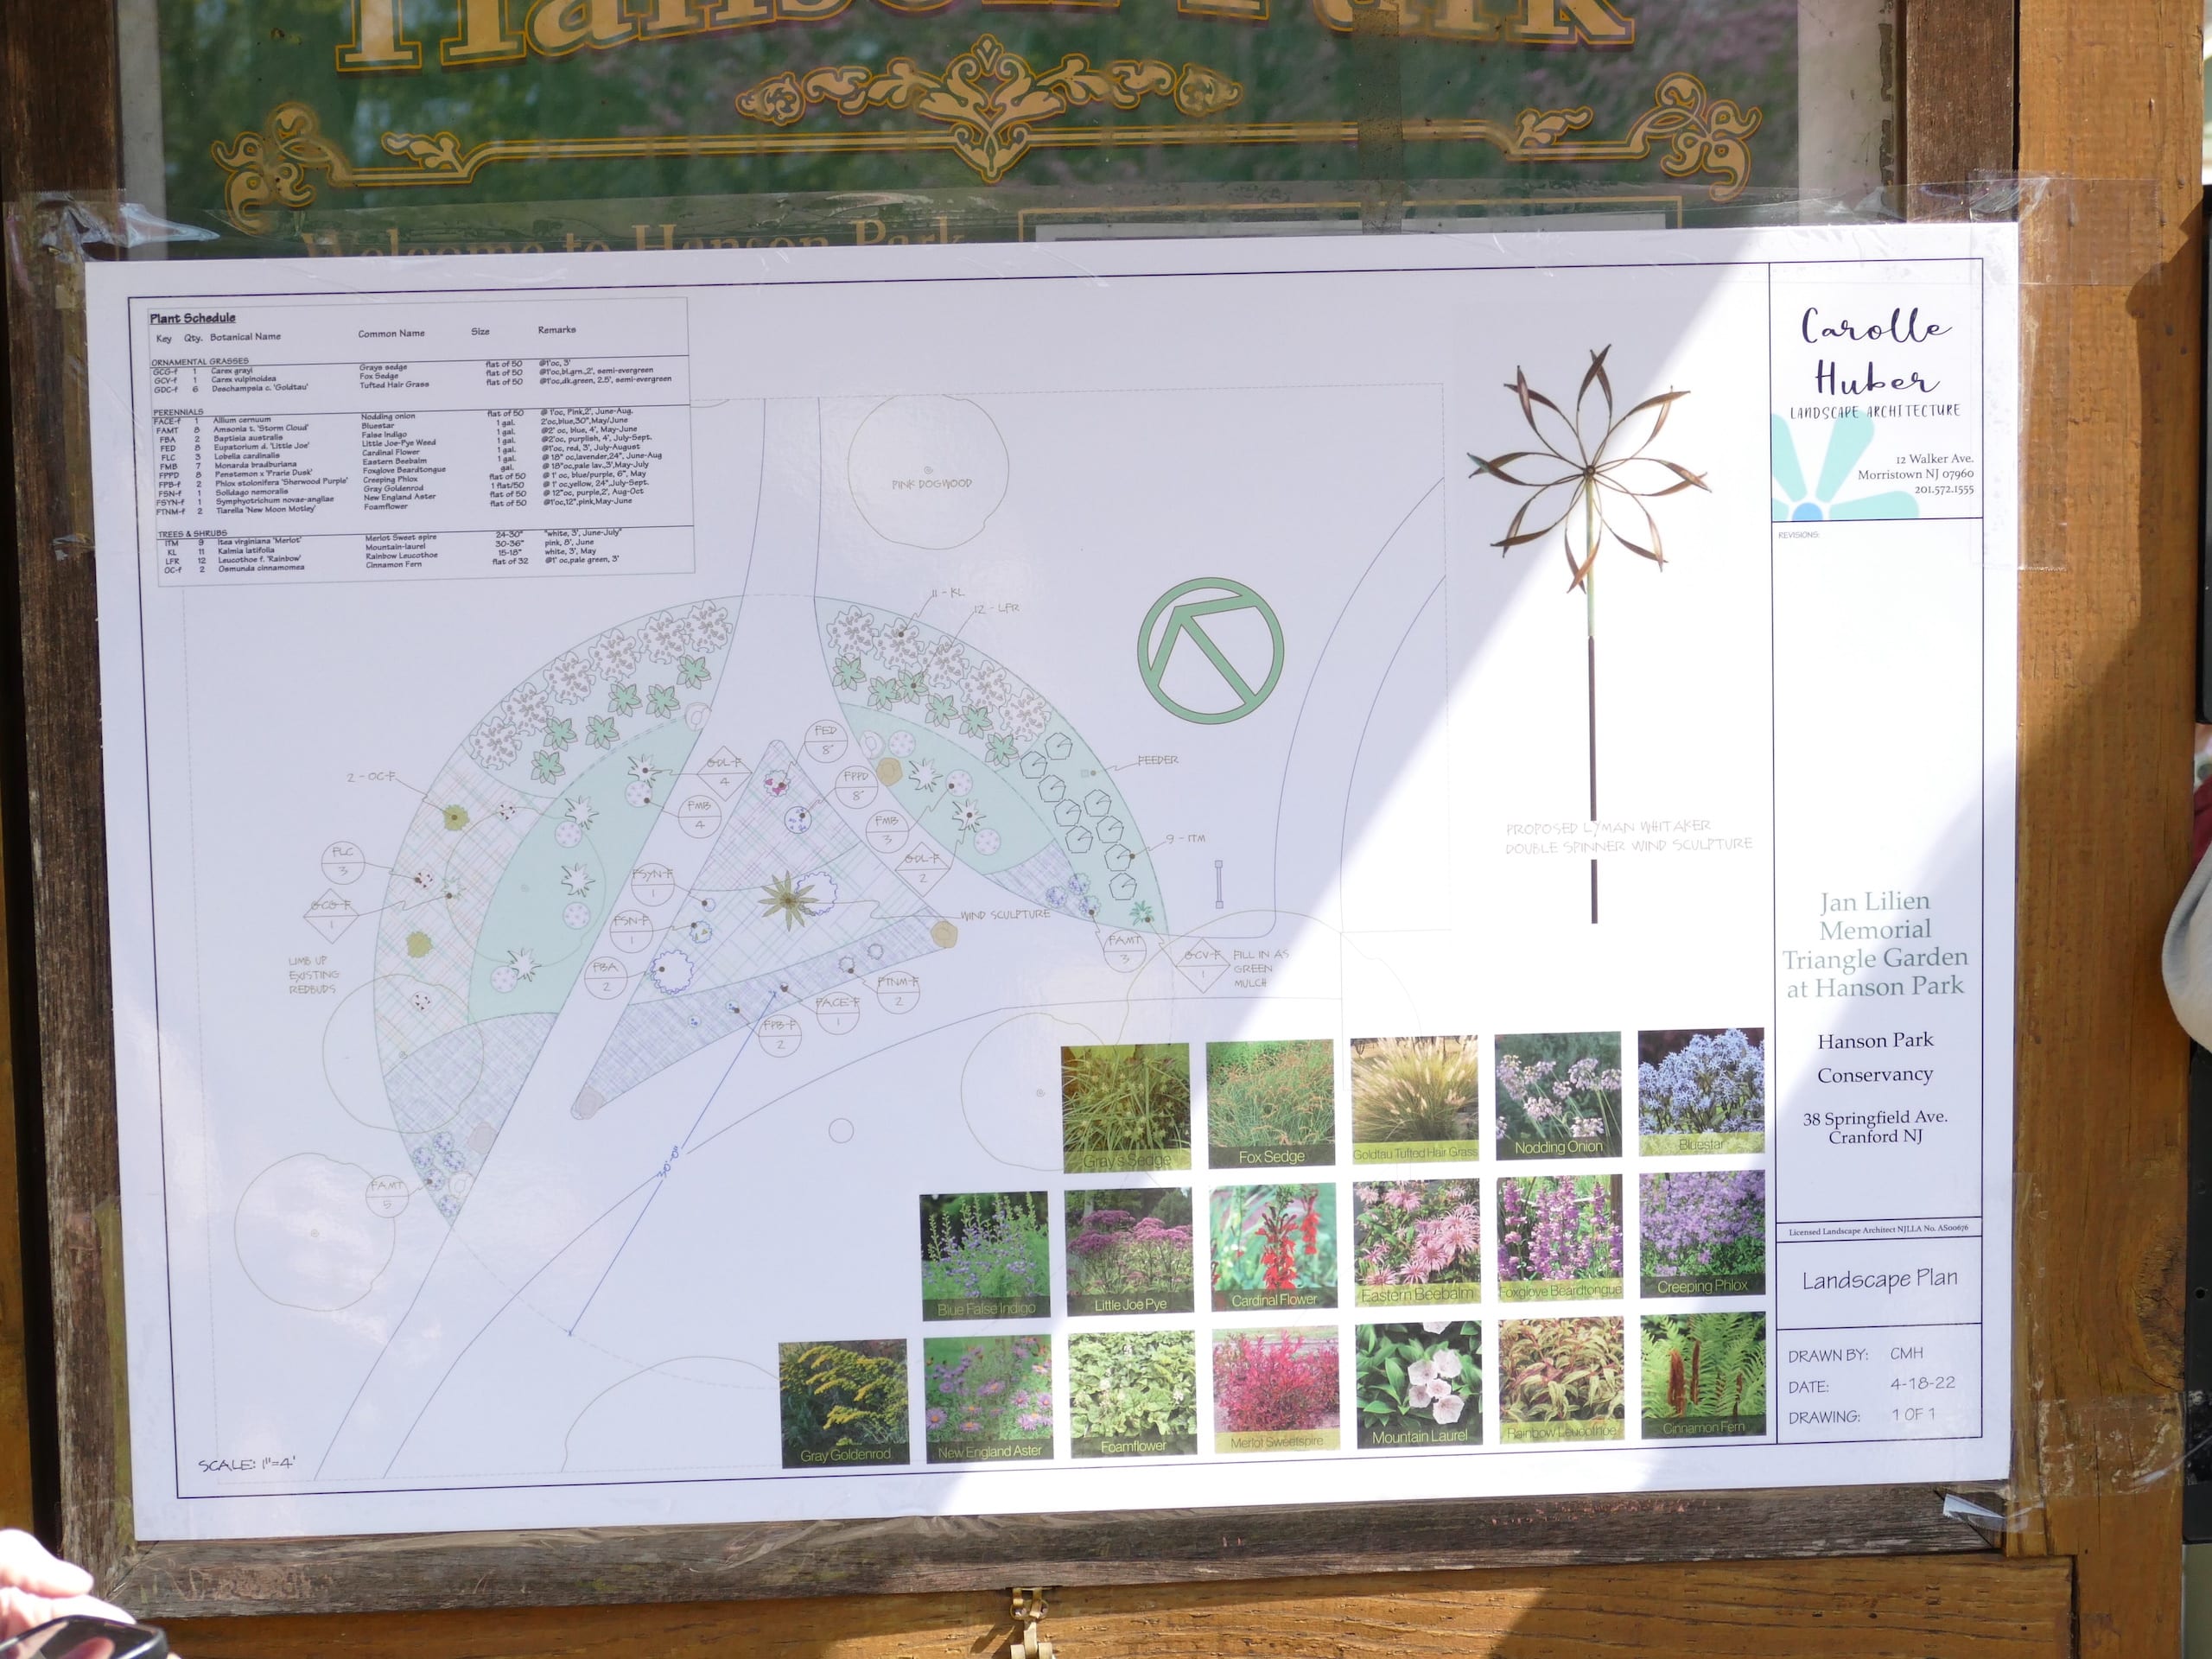 Plan for the Jan Lilien Memorial Triangle Garden